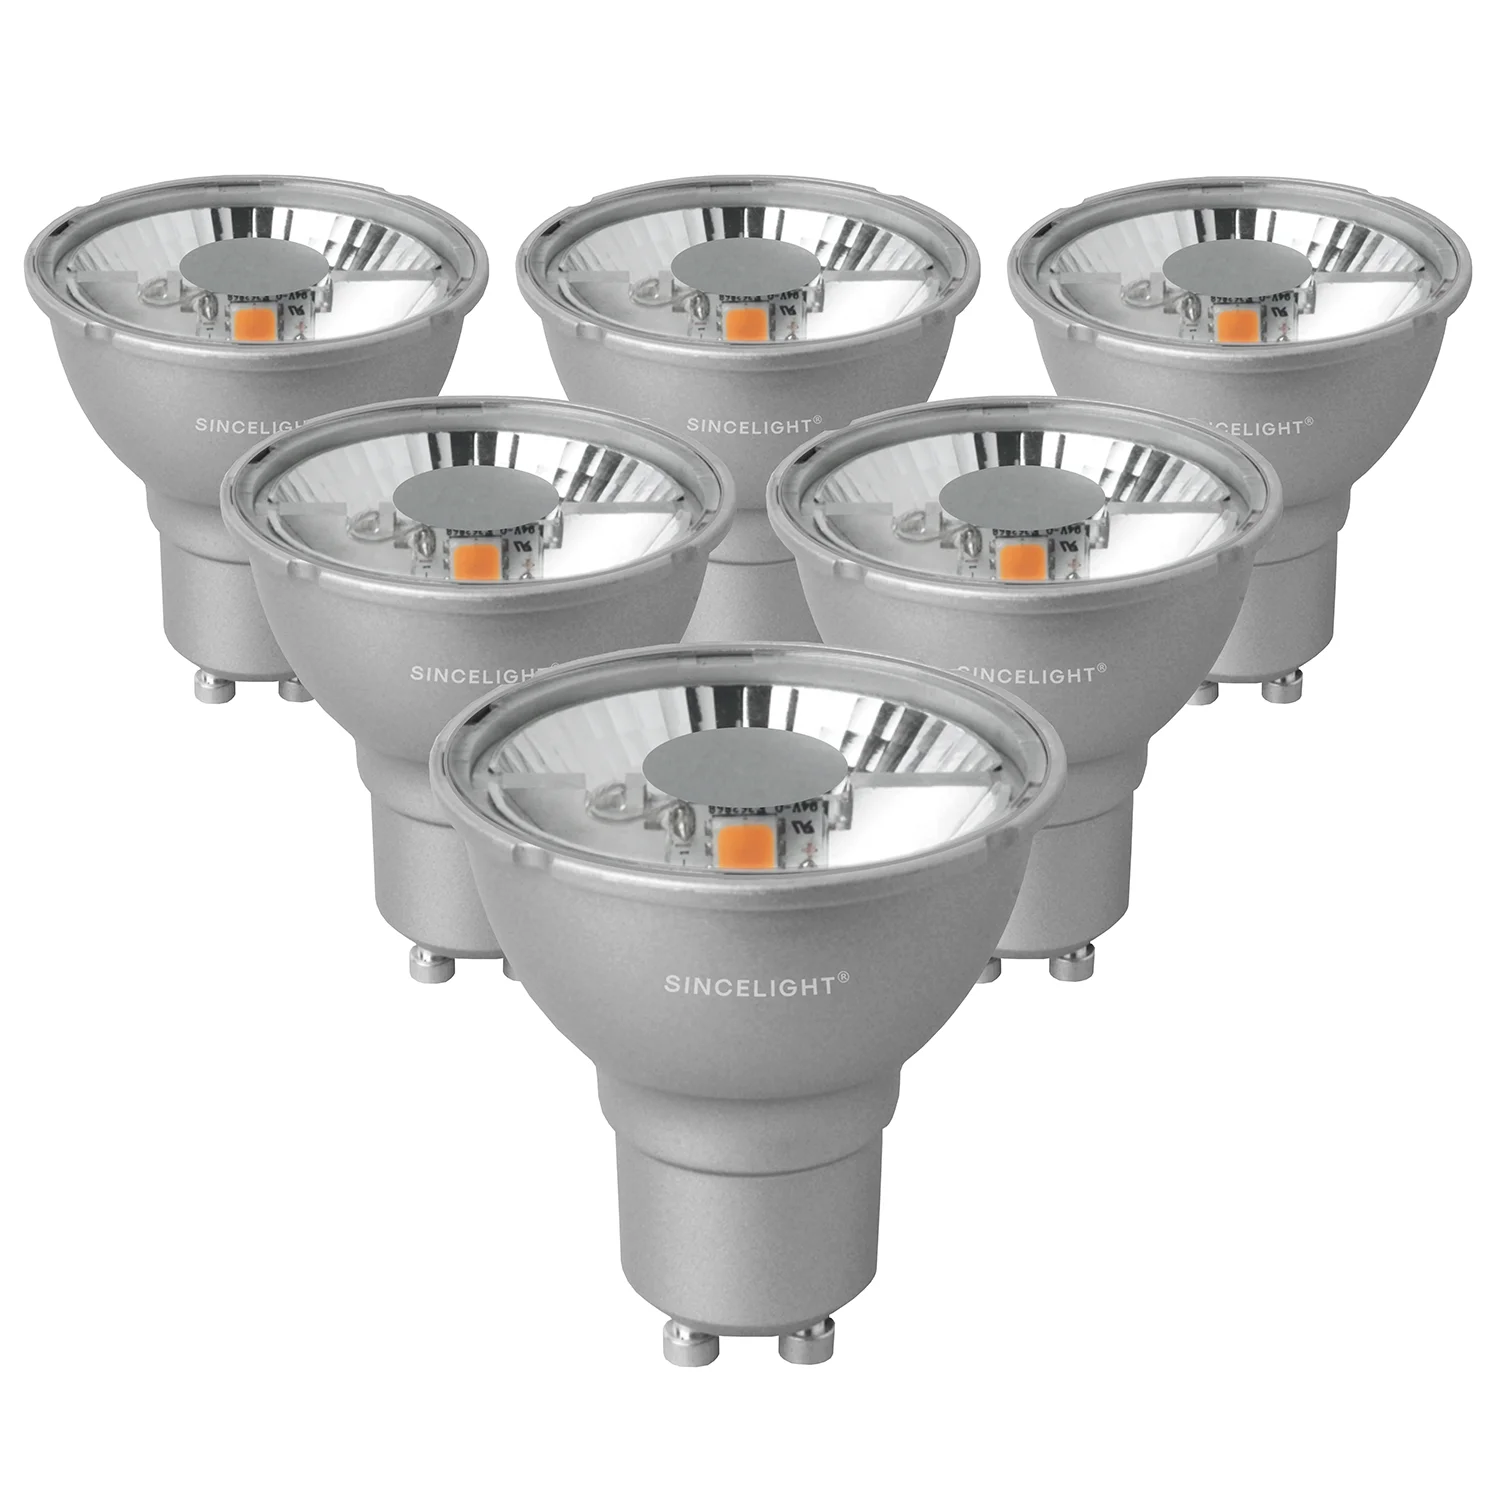 

PAR16 LED Reflector Light Bulb with GU10 Base,5W,2700K,4000K,6500K, Professional Anti-Glare Spotlight/Downlights,Pack of 6